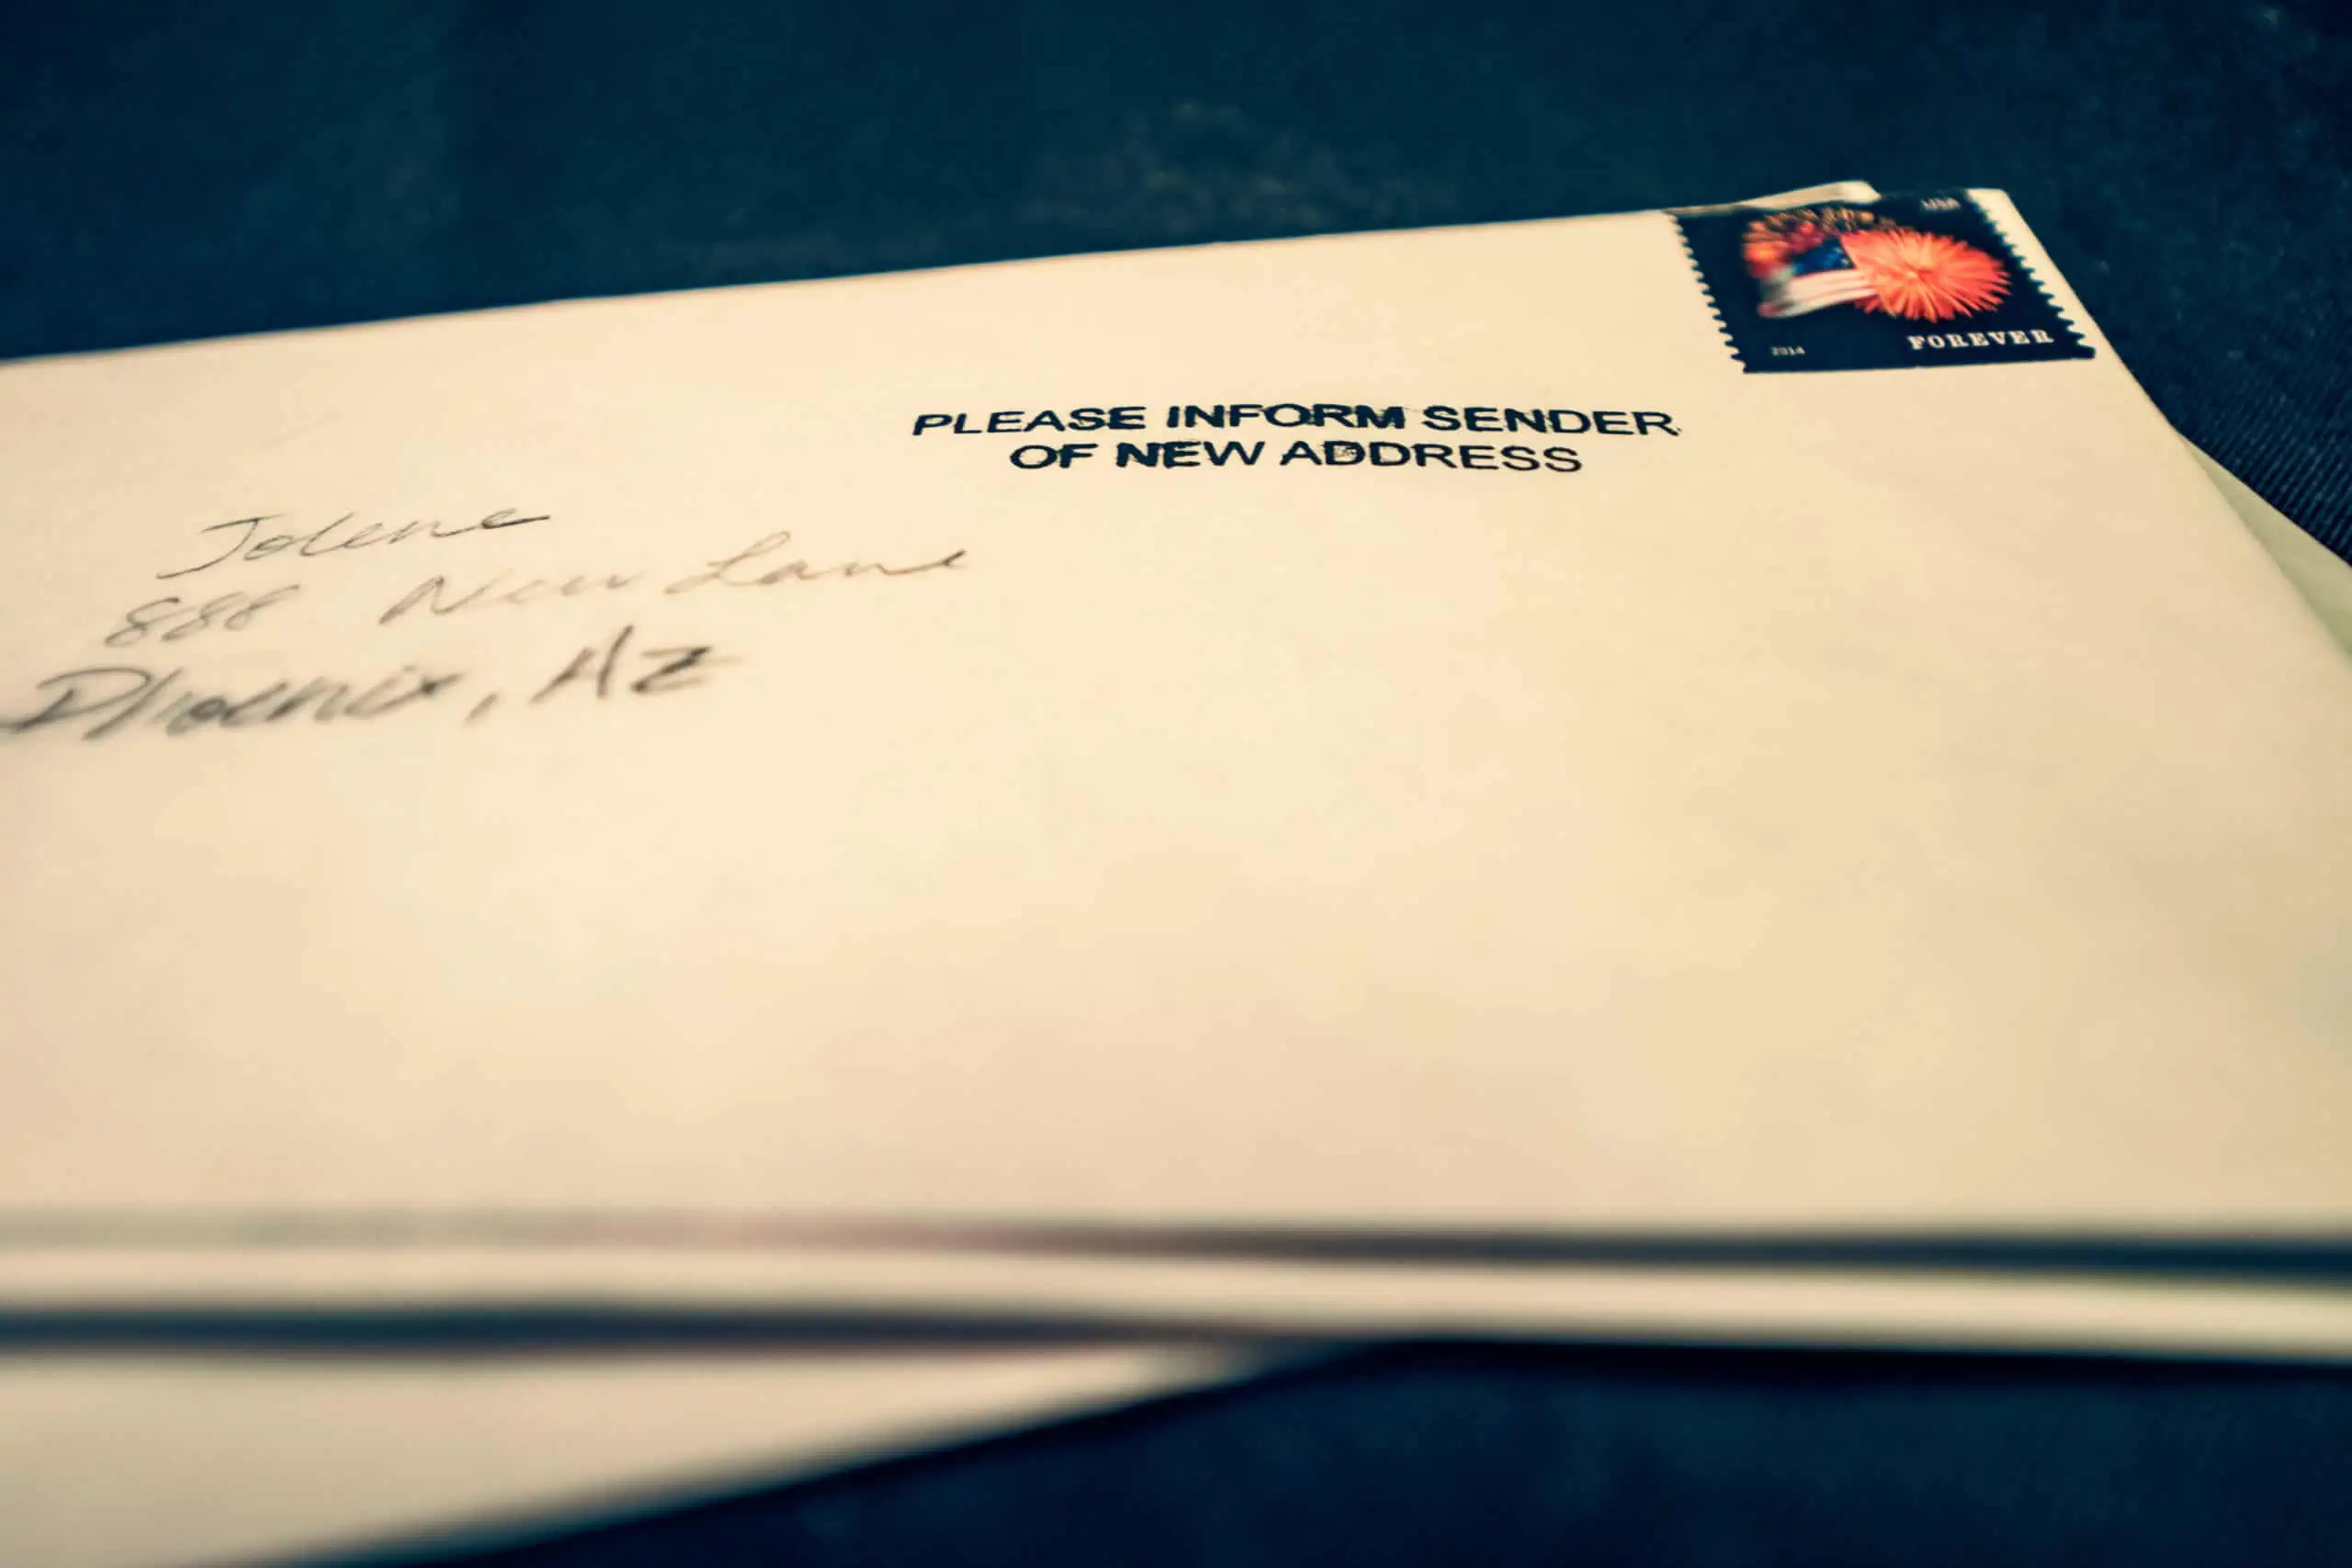 Unclaimed funds resulting from letter stamped "return to sender".